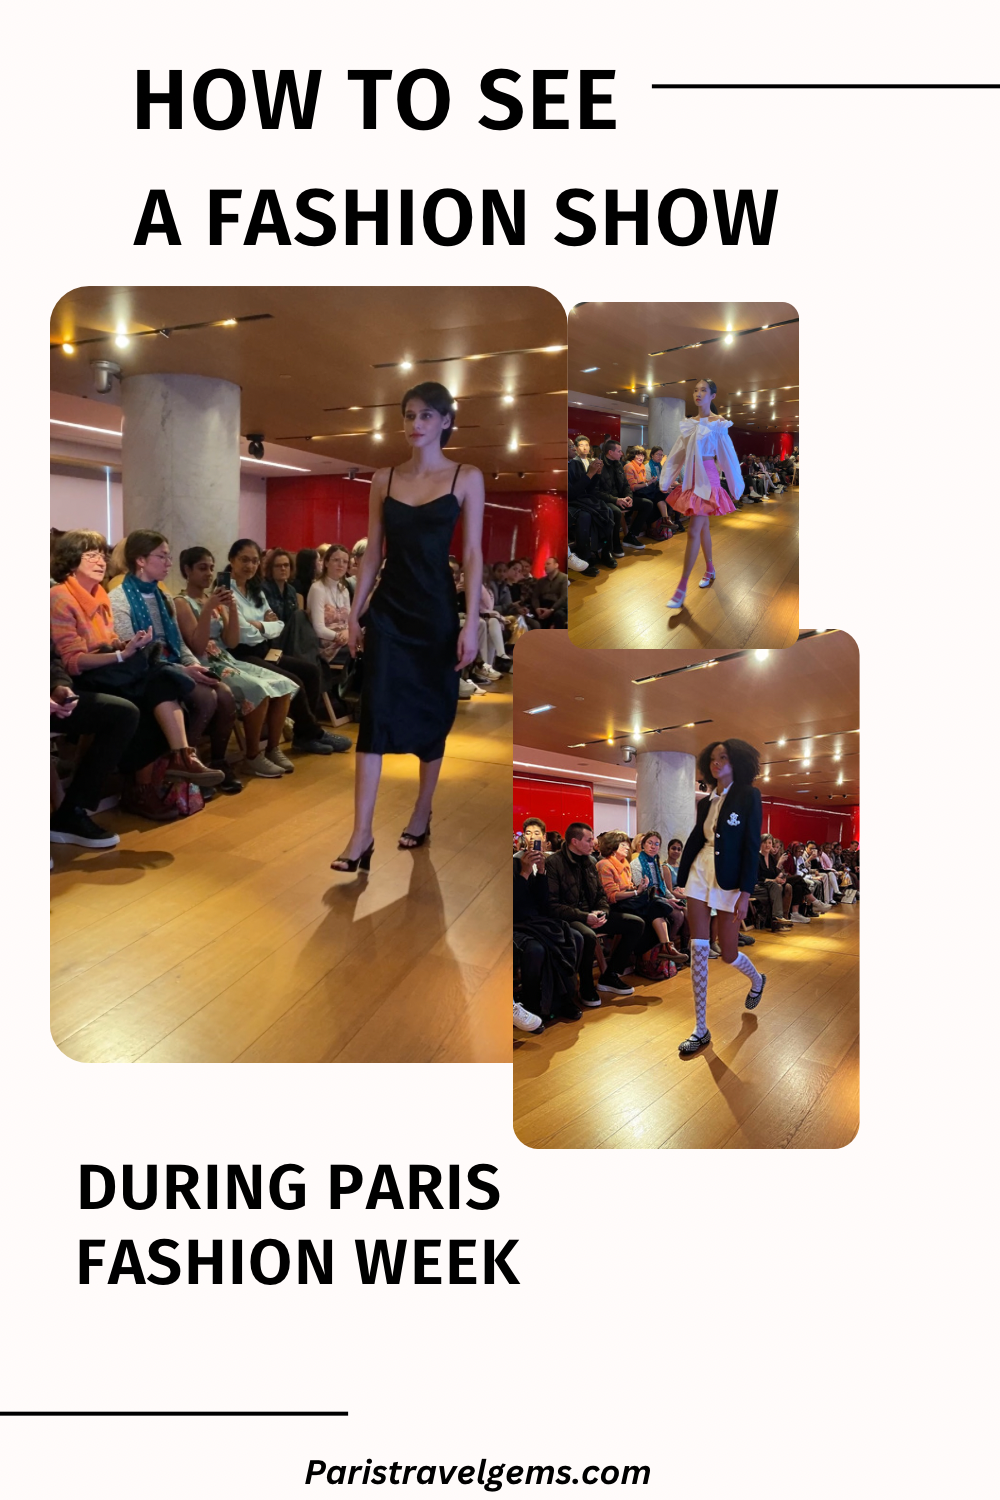 How To See a Fashion Show During Paris Fashion Week